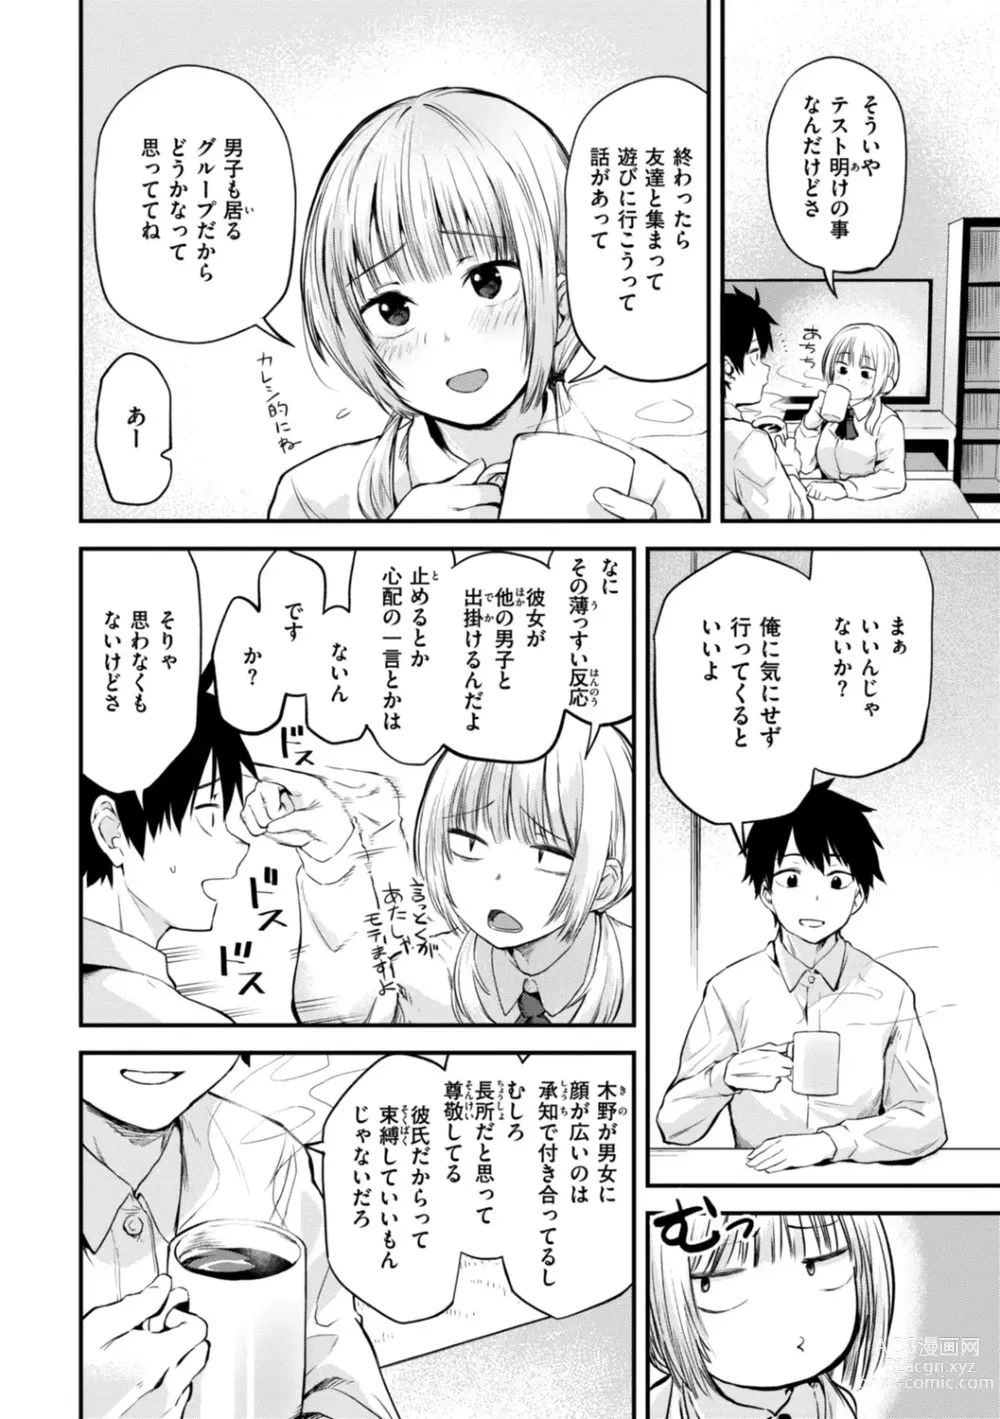 Page 28 of manga Jaa, Ecchi Shichau? - Shall we have H then?